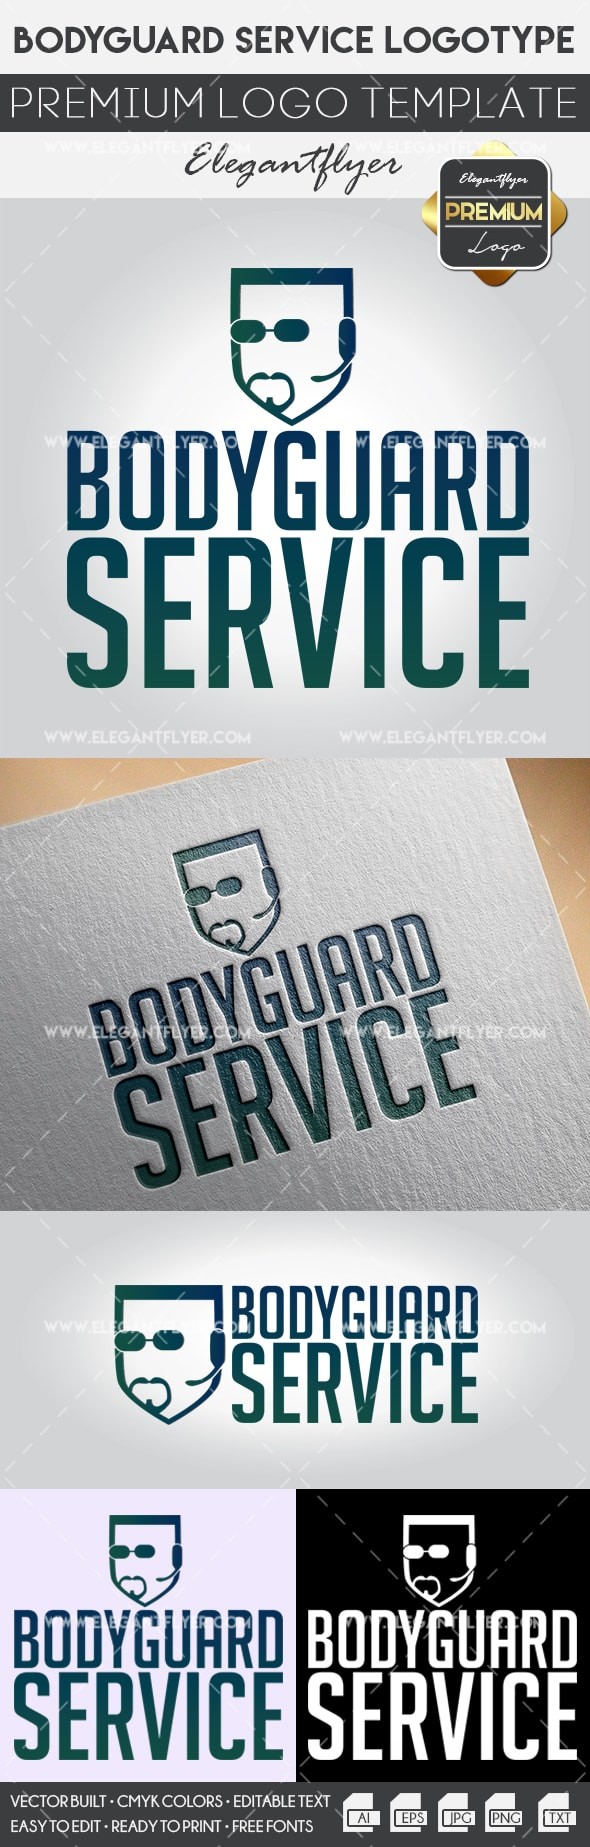 Bodyguard Service by ElegantFlyer